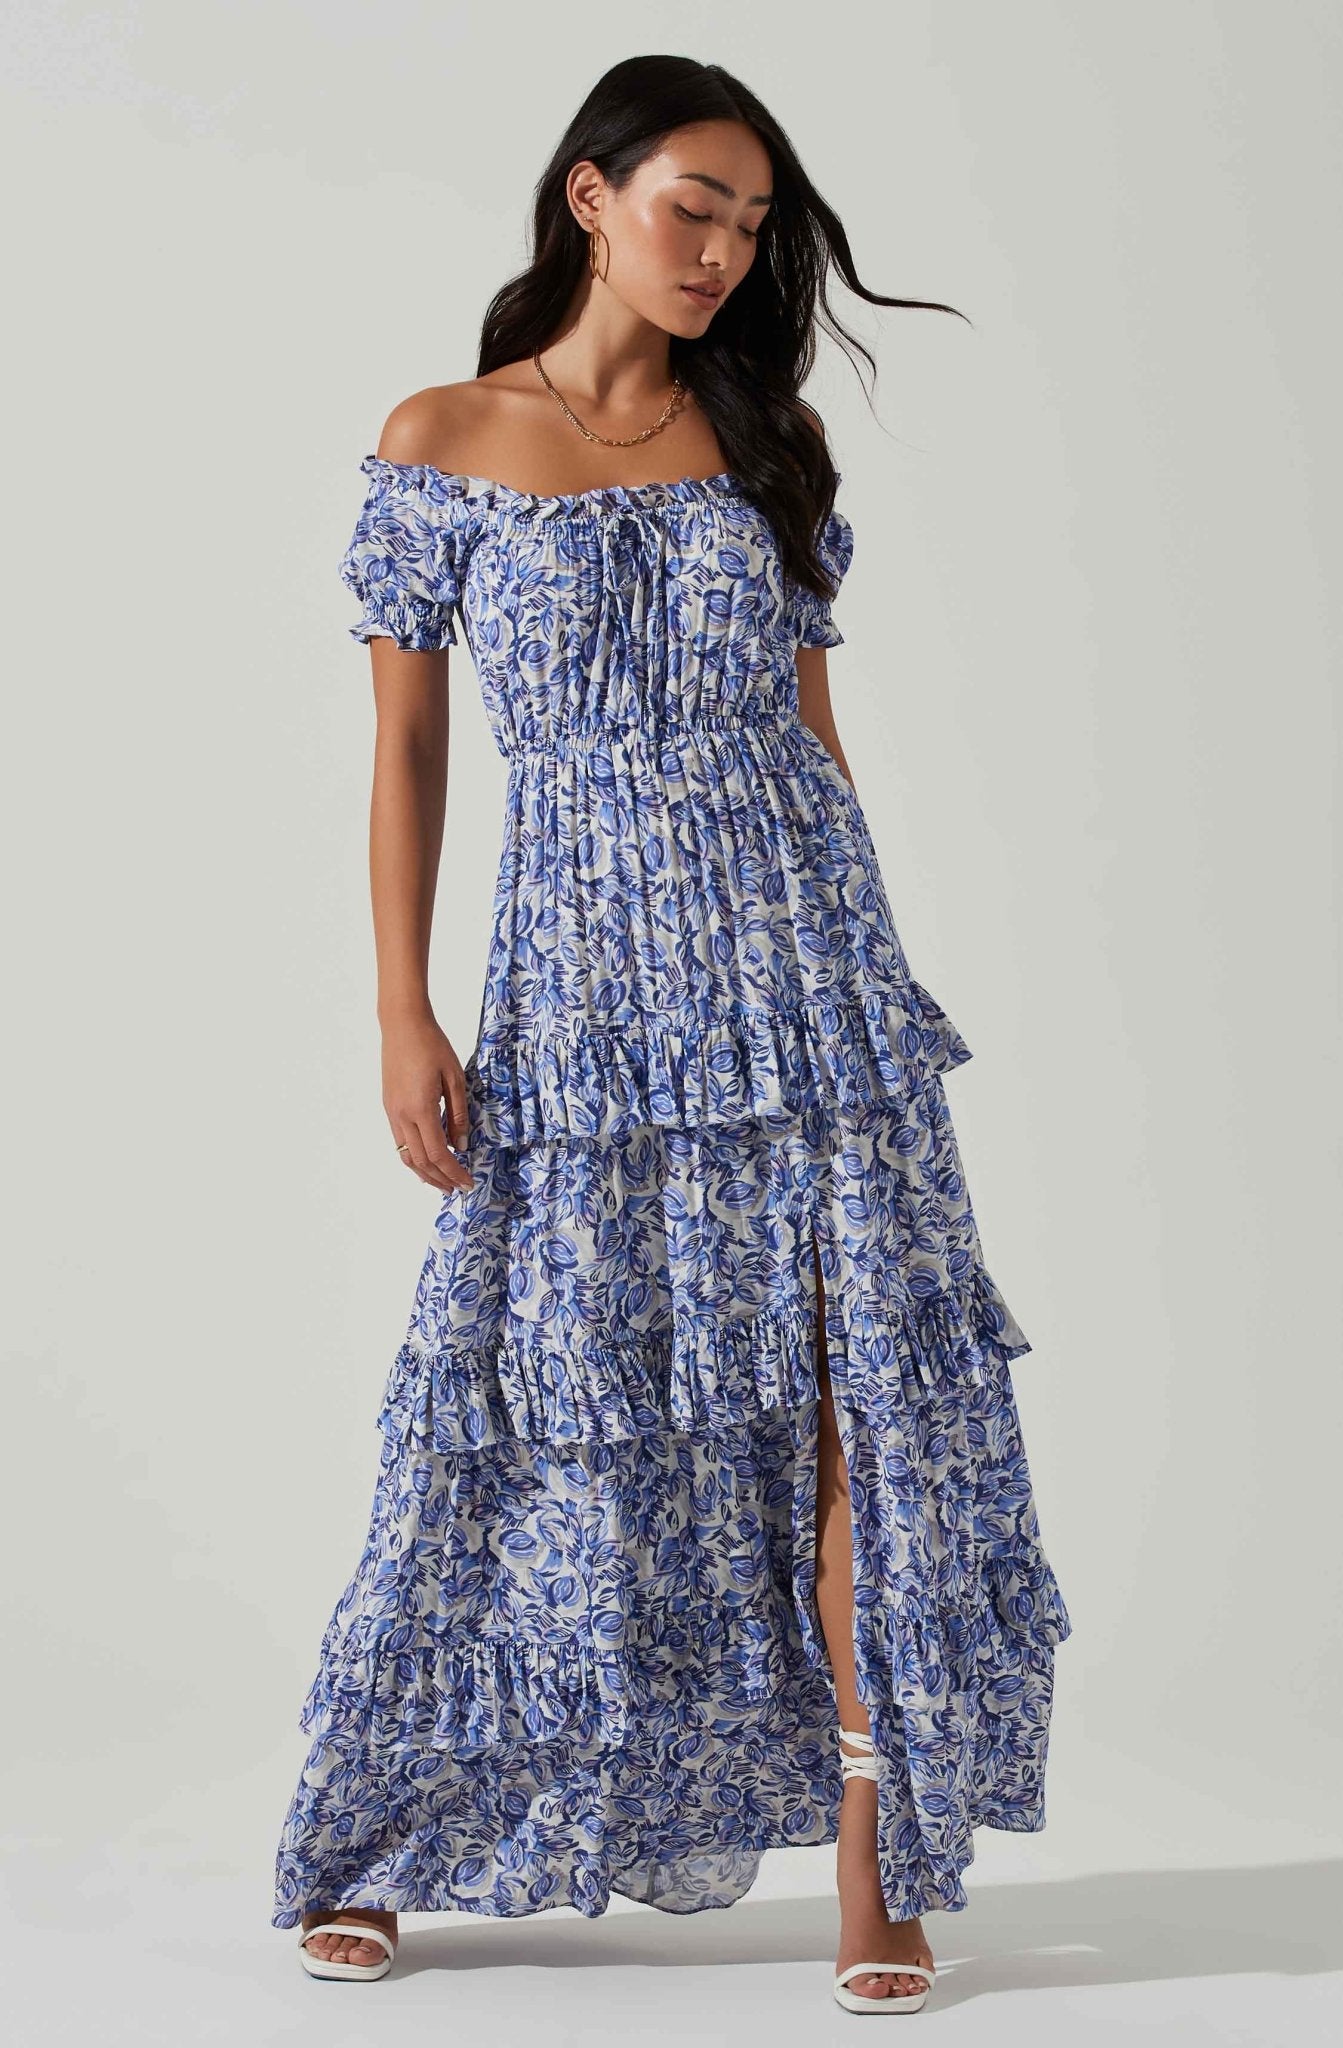 ASTR Viona Floral Off Shoulder Maxi Dress in Blue White Multi - Estilo Boutique